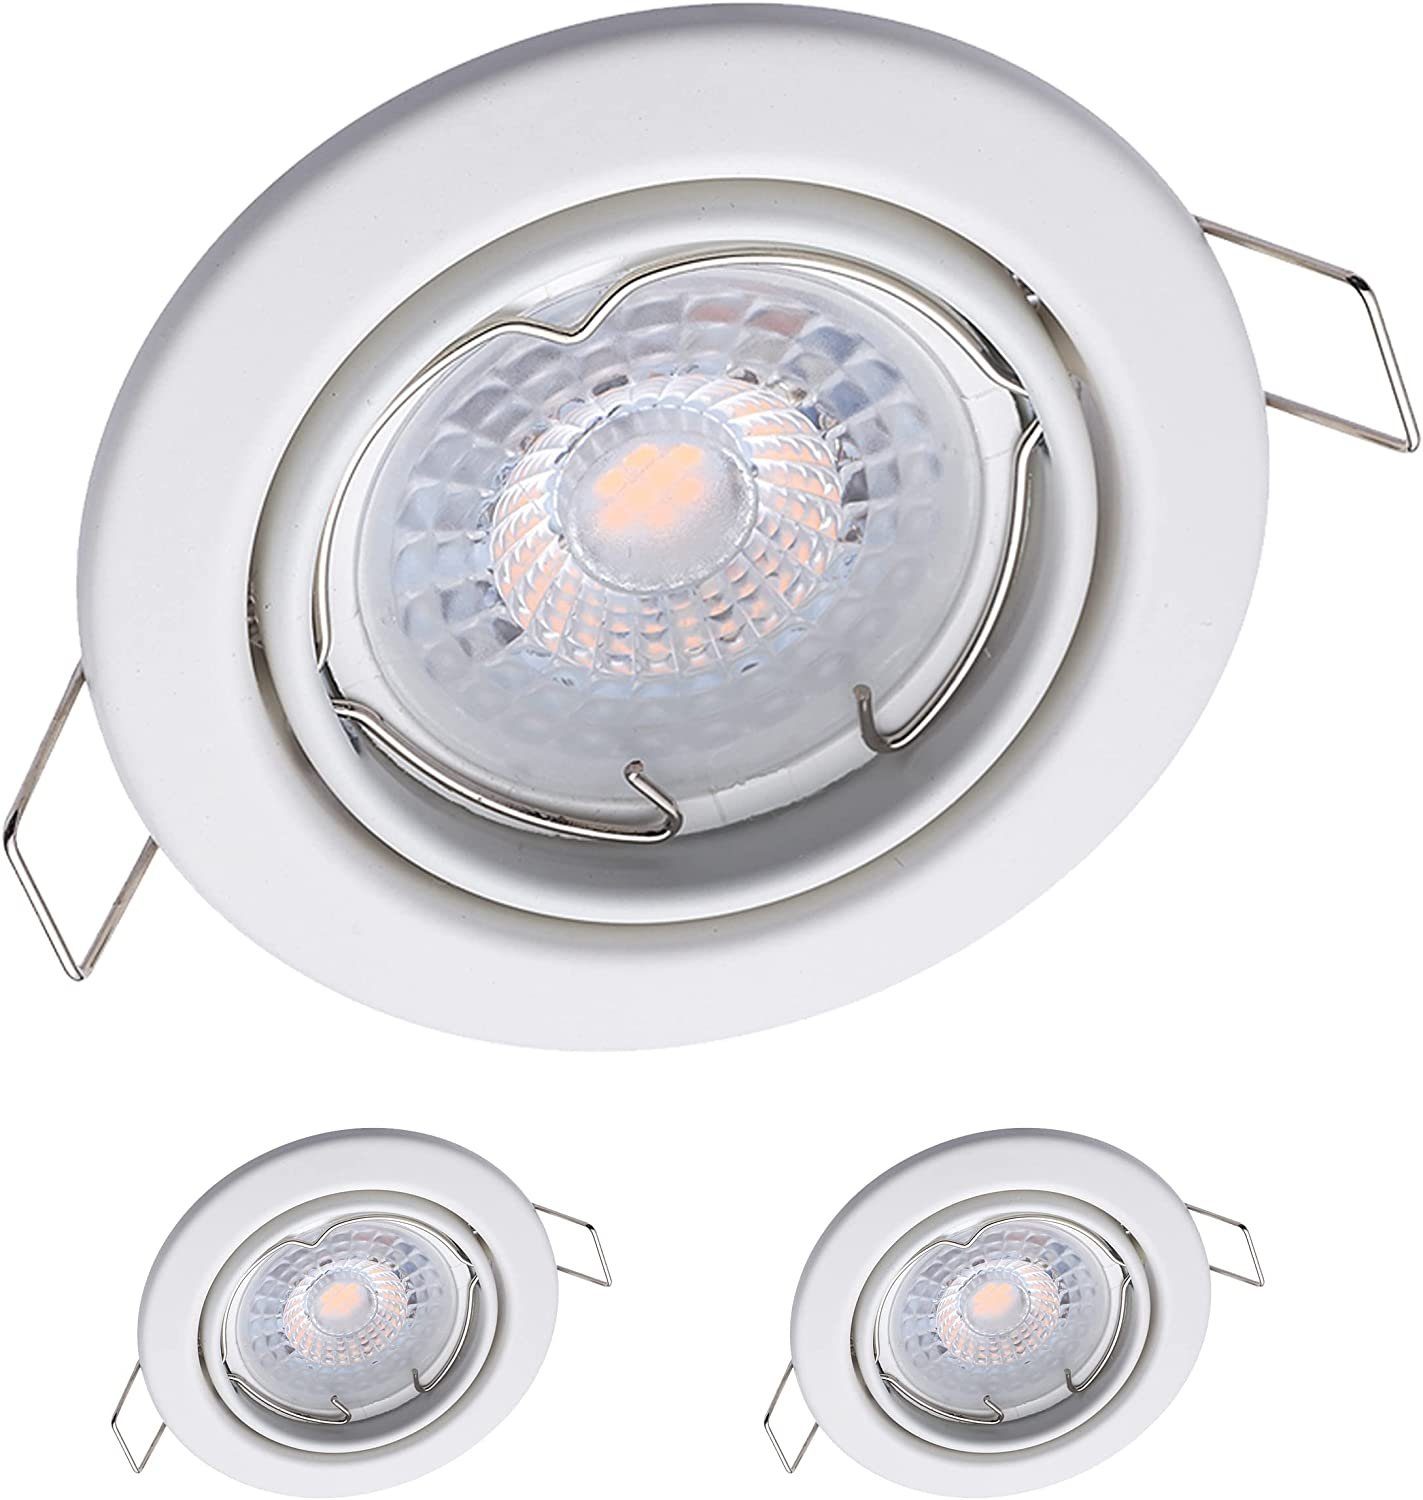 Oktaplex lighting LED Einbaustrahler 3er Set LED Deckenspot flach inkl. LED Module 4,8W 380 Lumen, schwenkbar, Leuchtmittel wechselbar, warmweiß, 3000 Kelvin 230V weiß